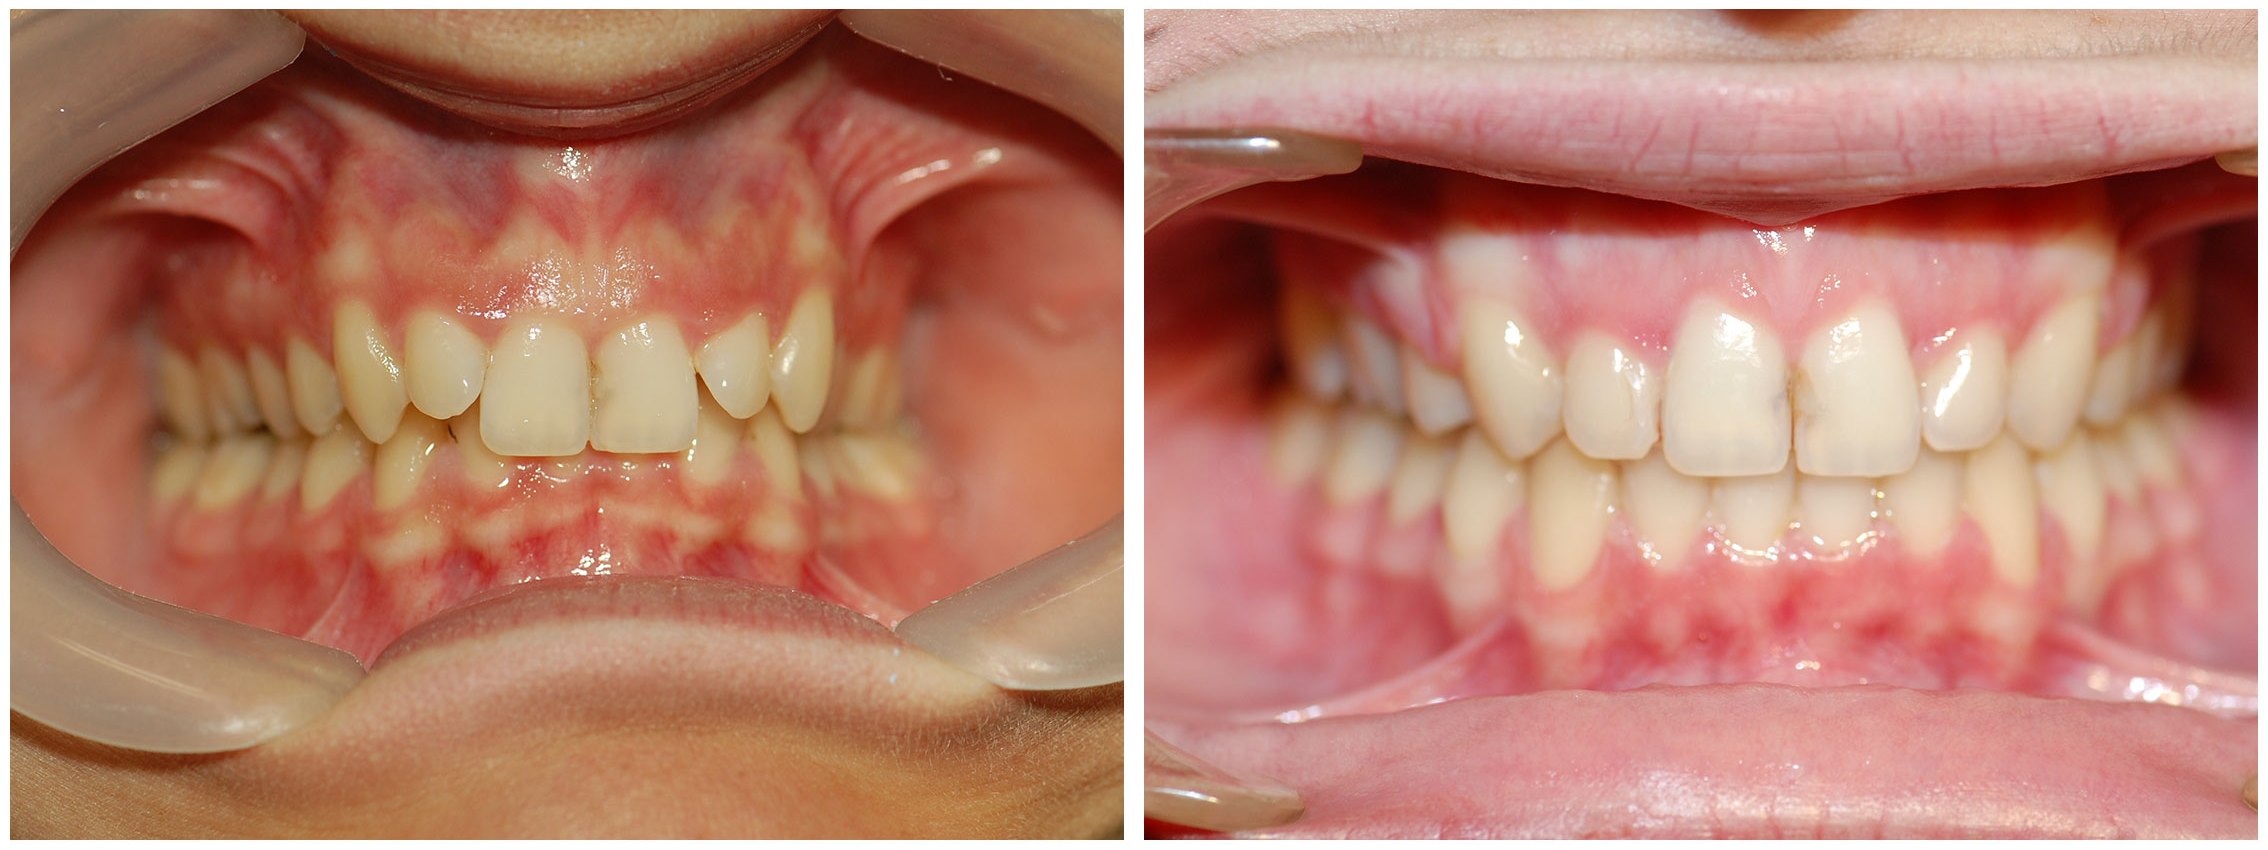 Teens Dental Braces Before & After